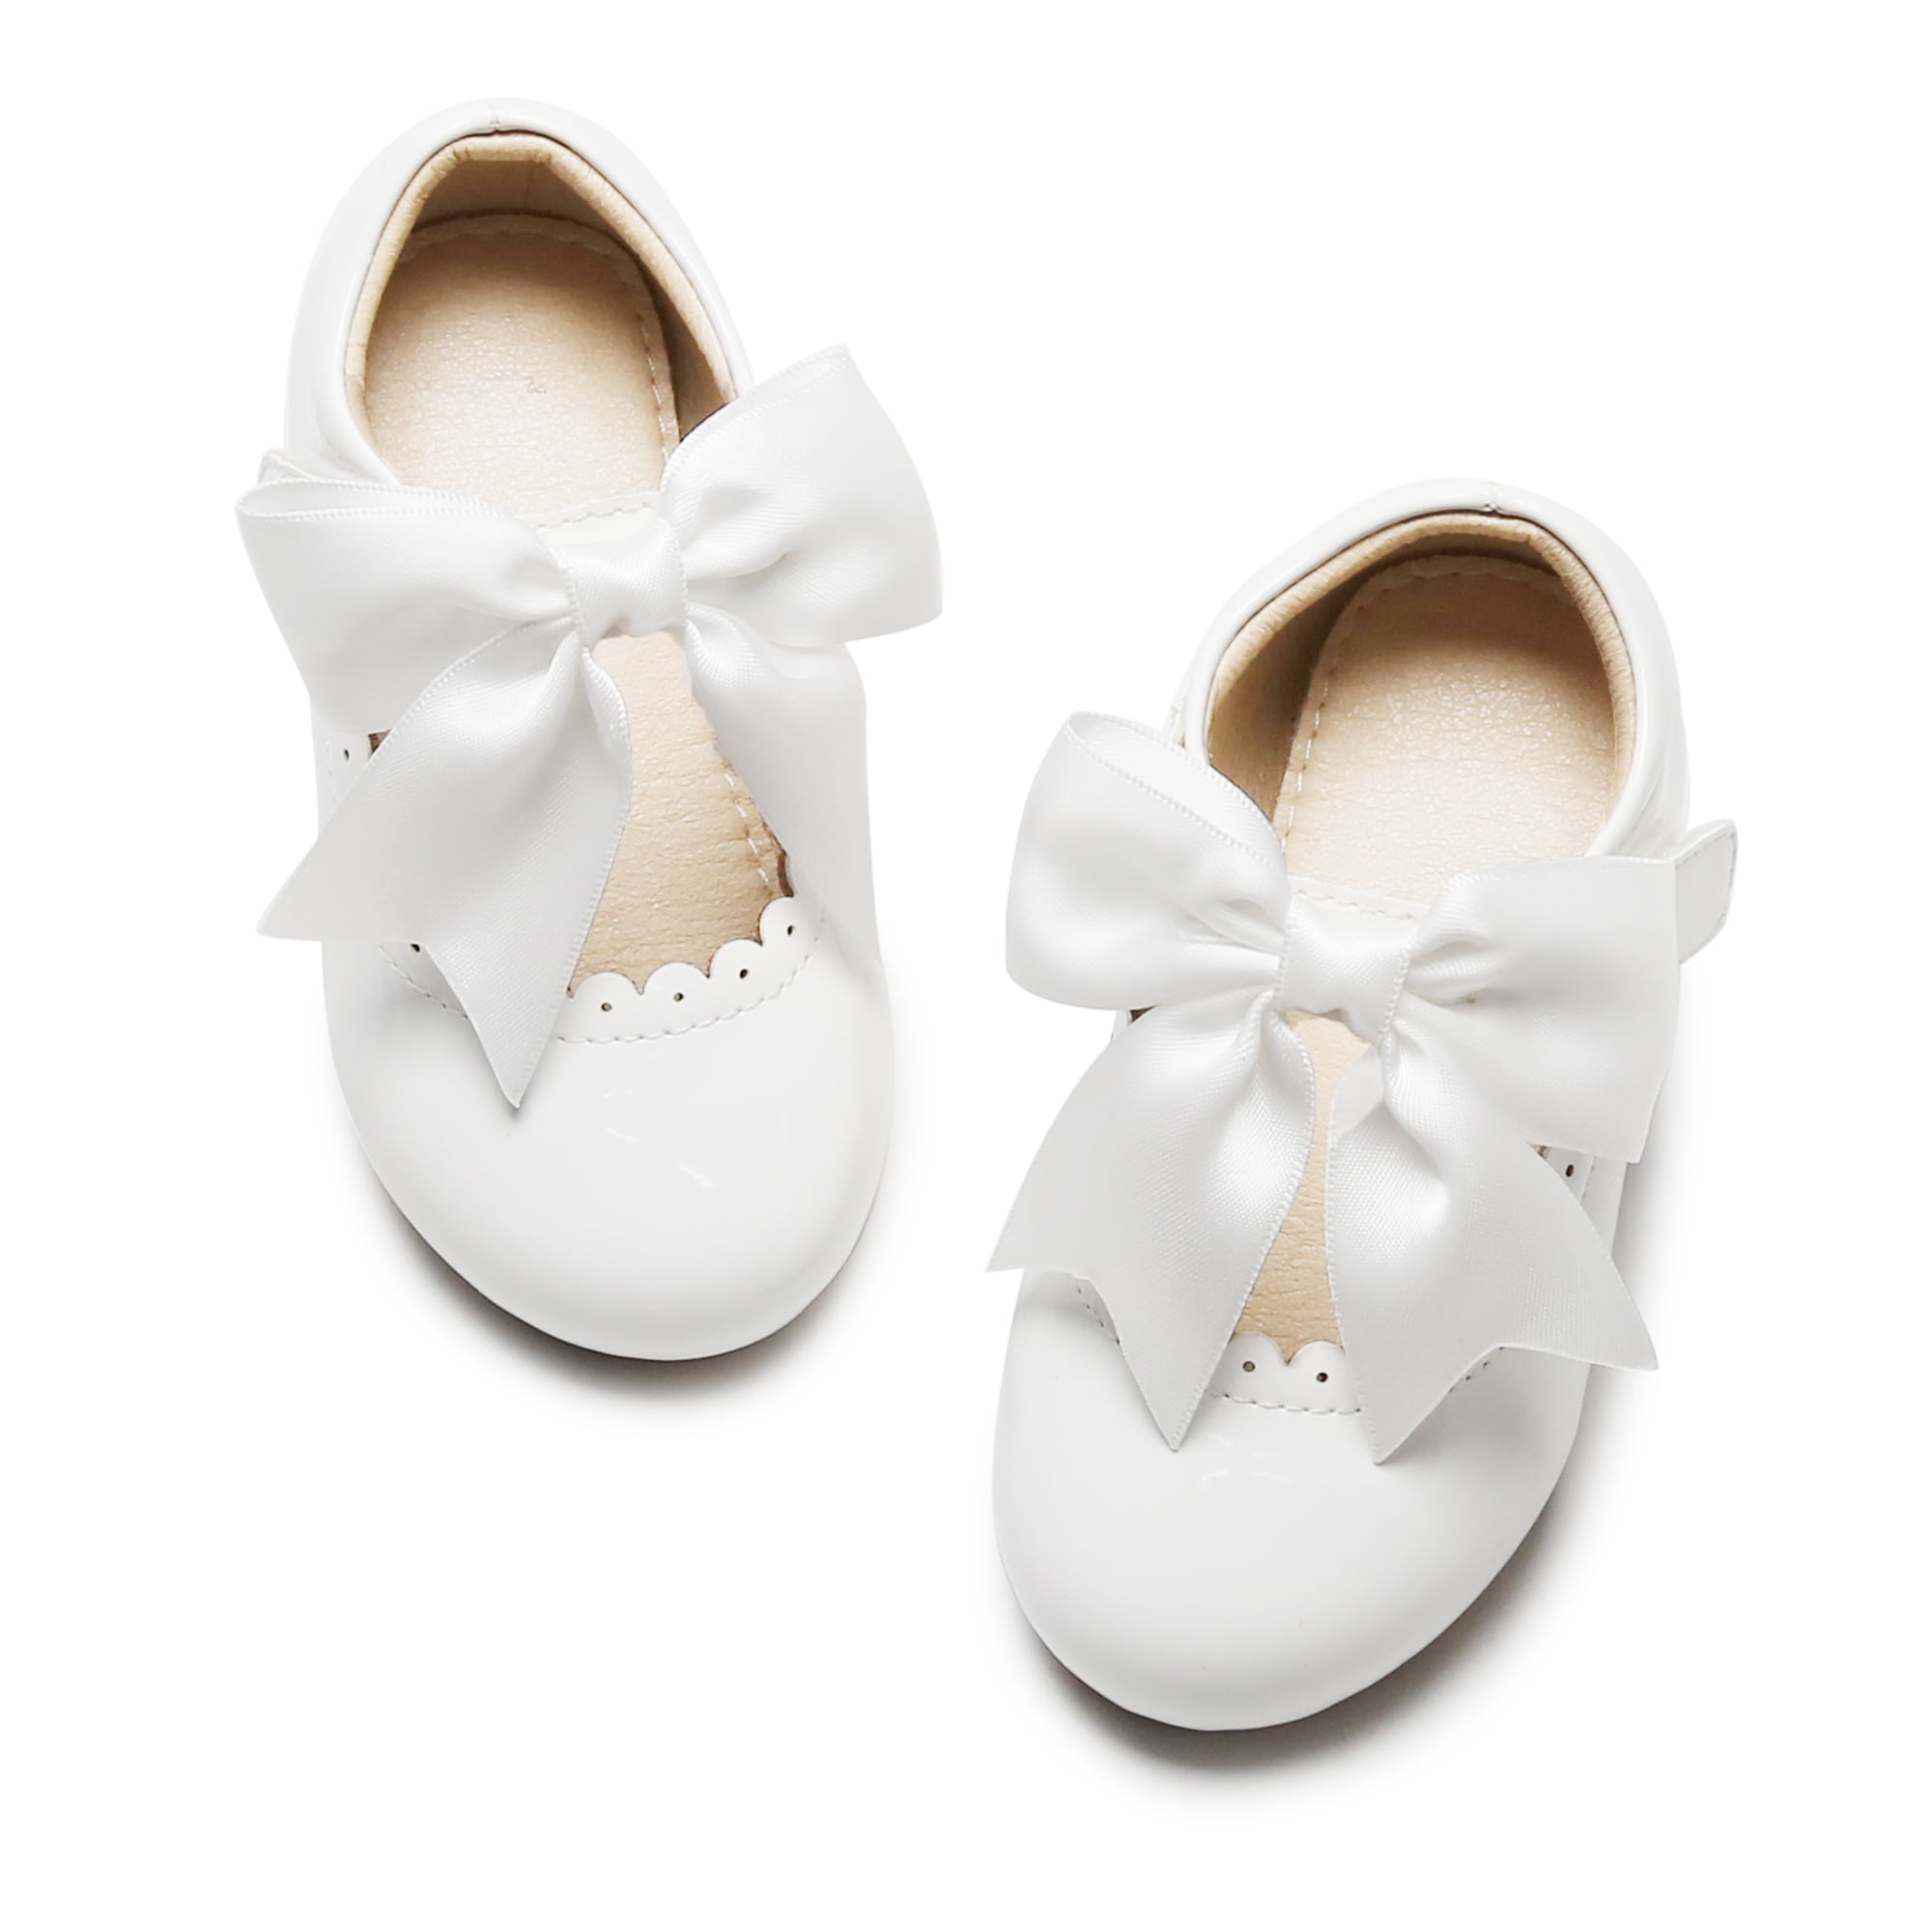 Kiderence Girls Flat Dress Shoes School Oxfords Marry Jane Toddler/Little Kids 